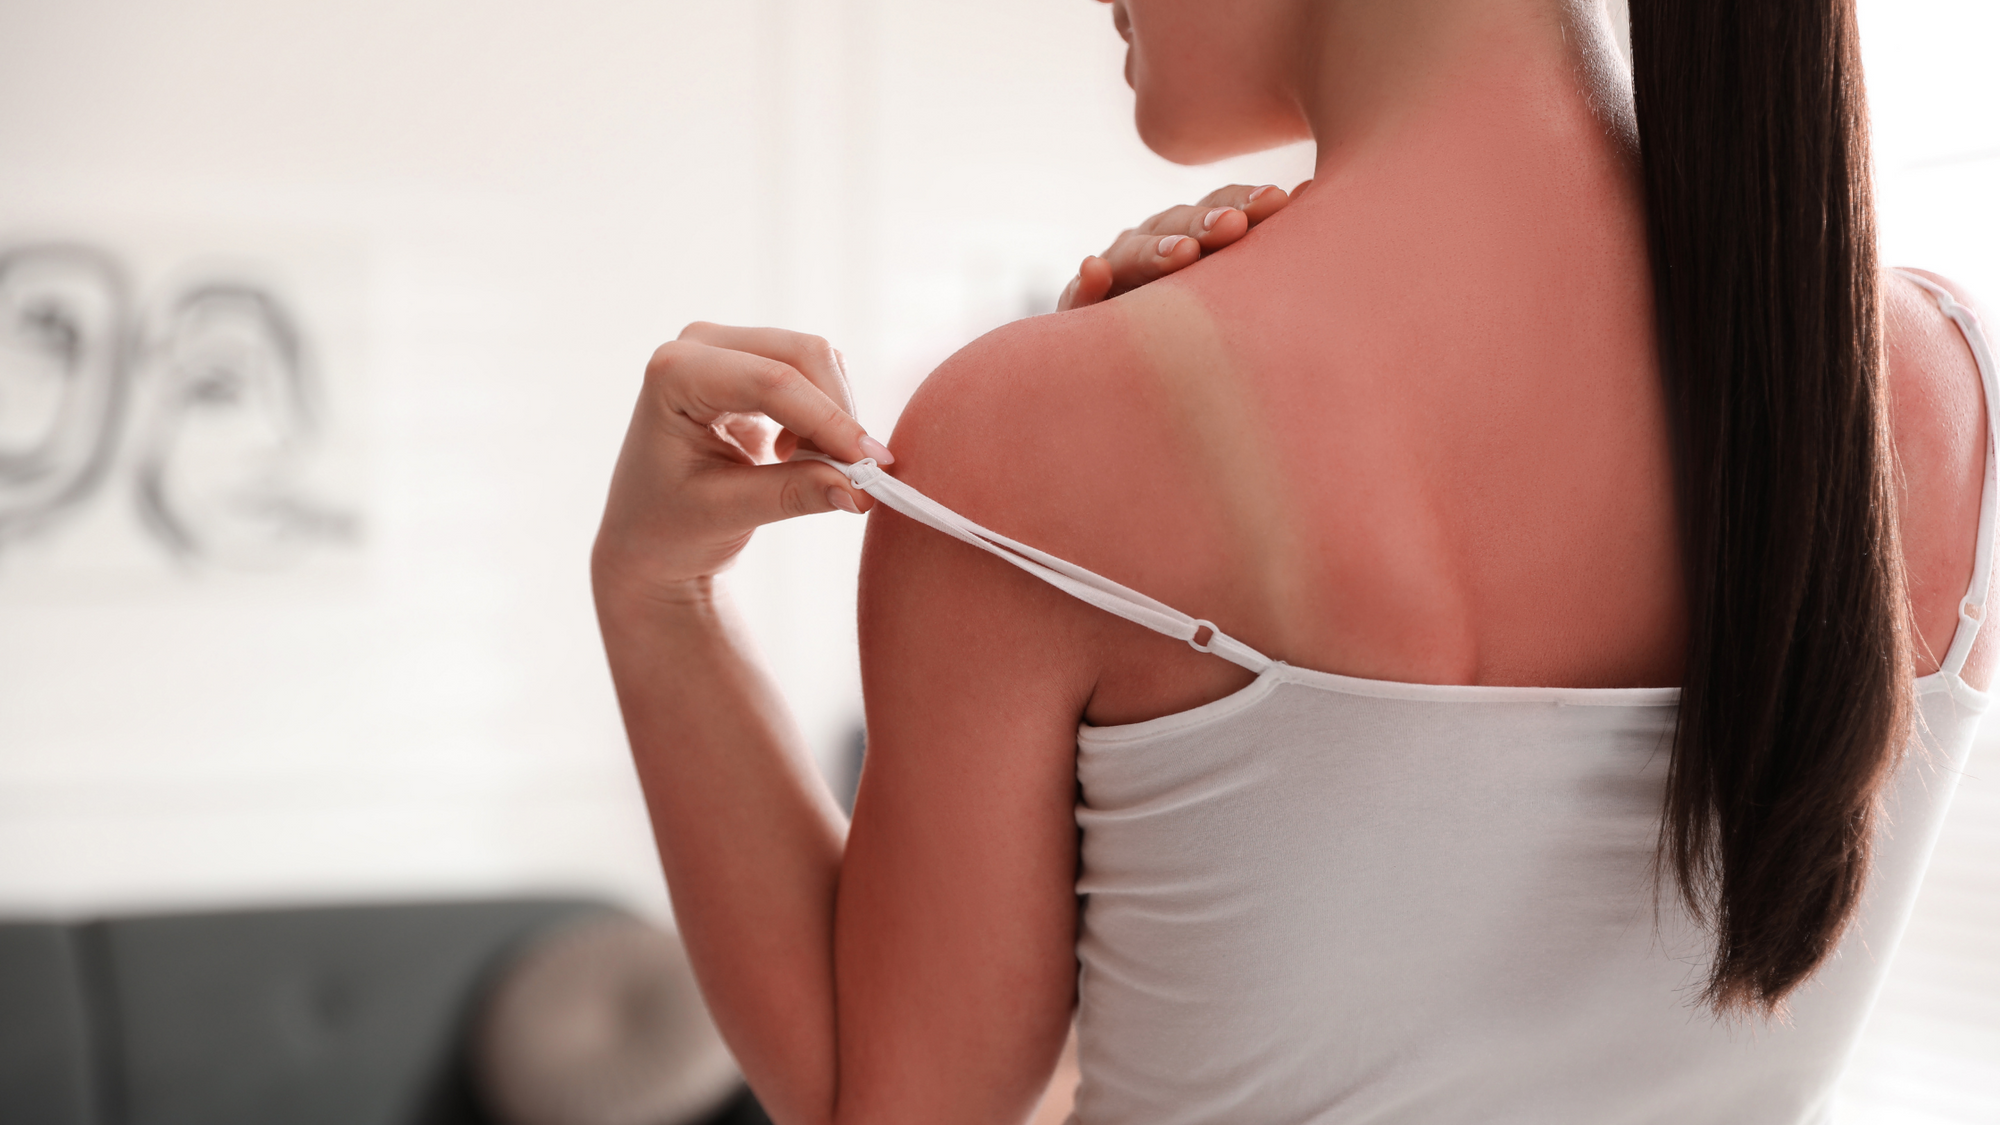 Why does sunburn hurt?